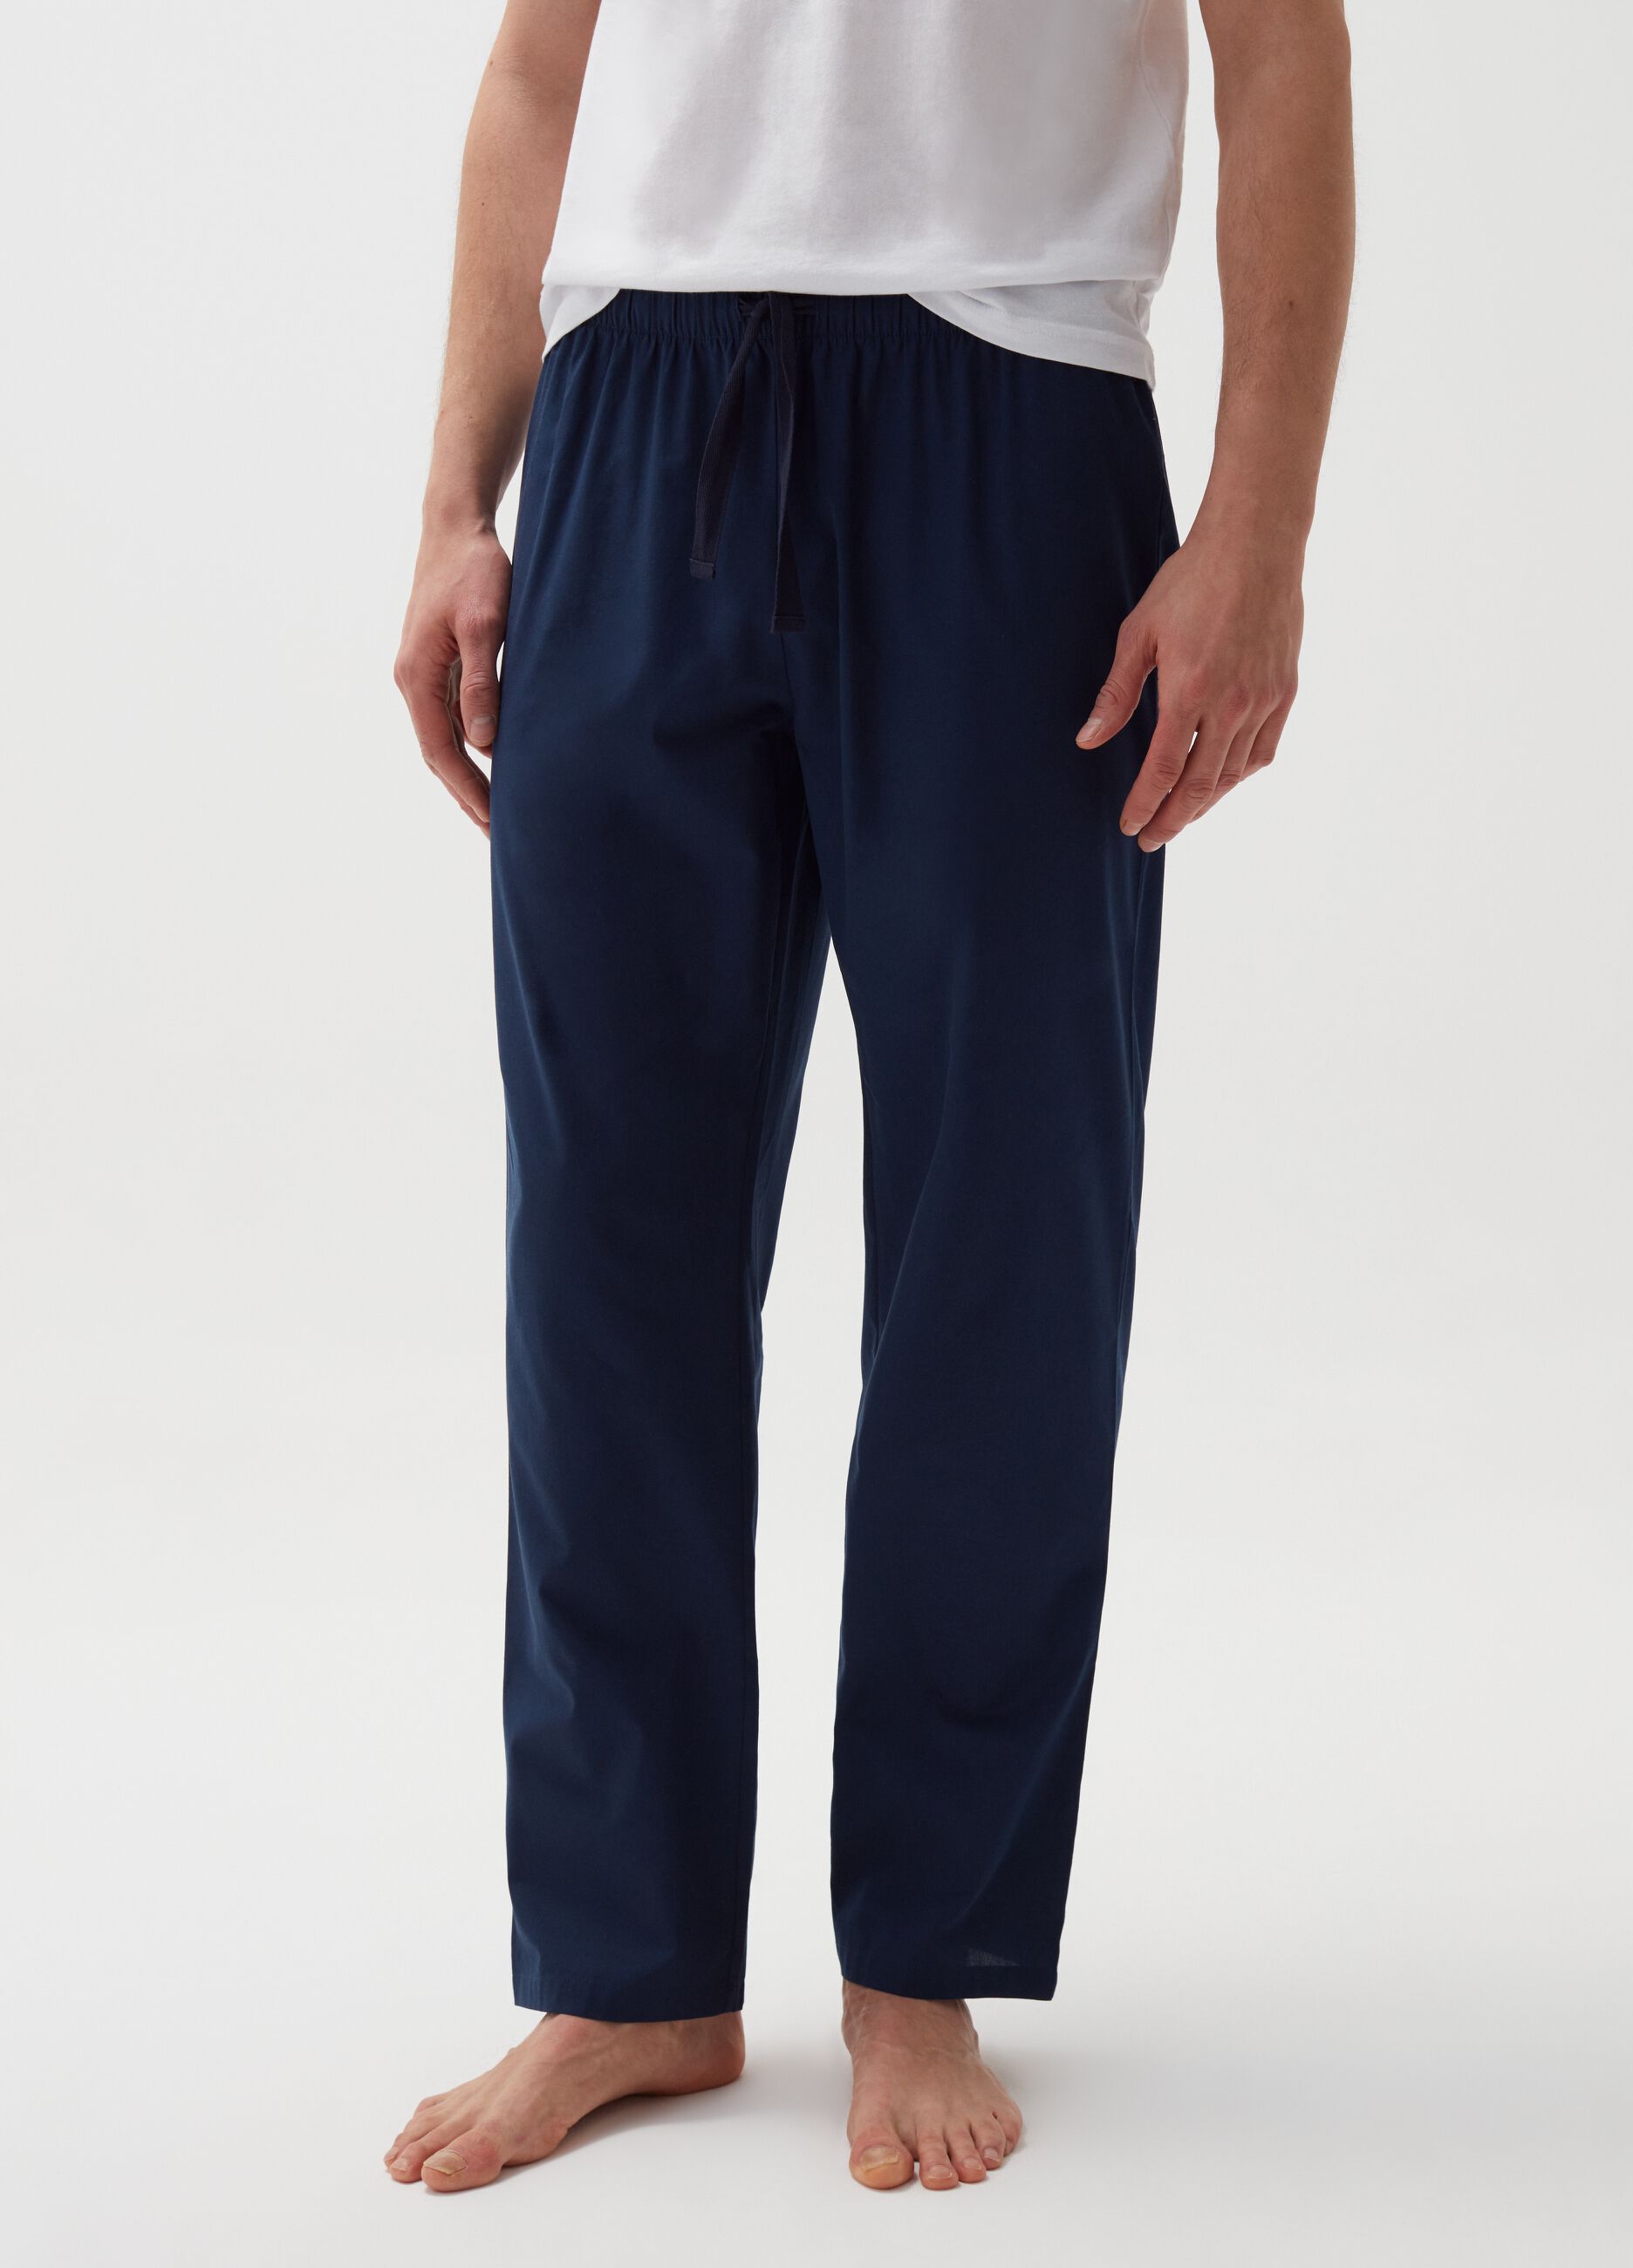 Pantalone pigiama in cotone con coulisse